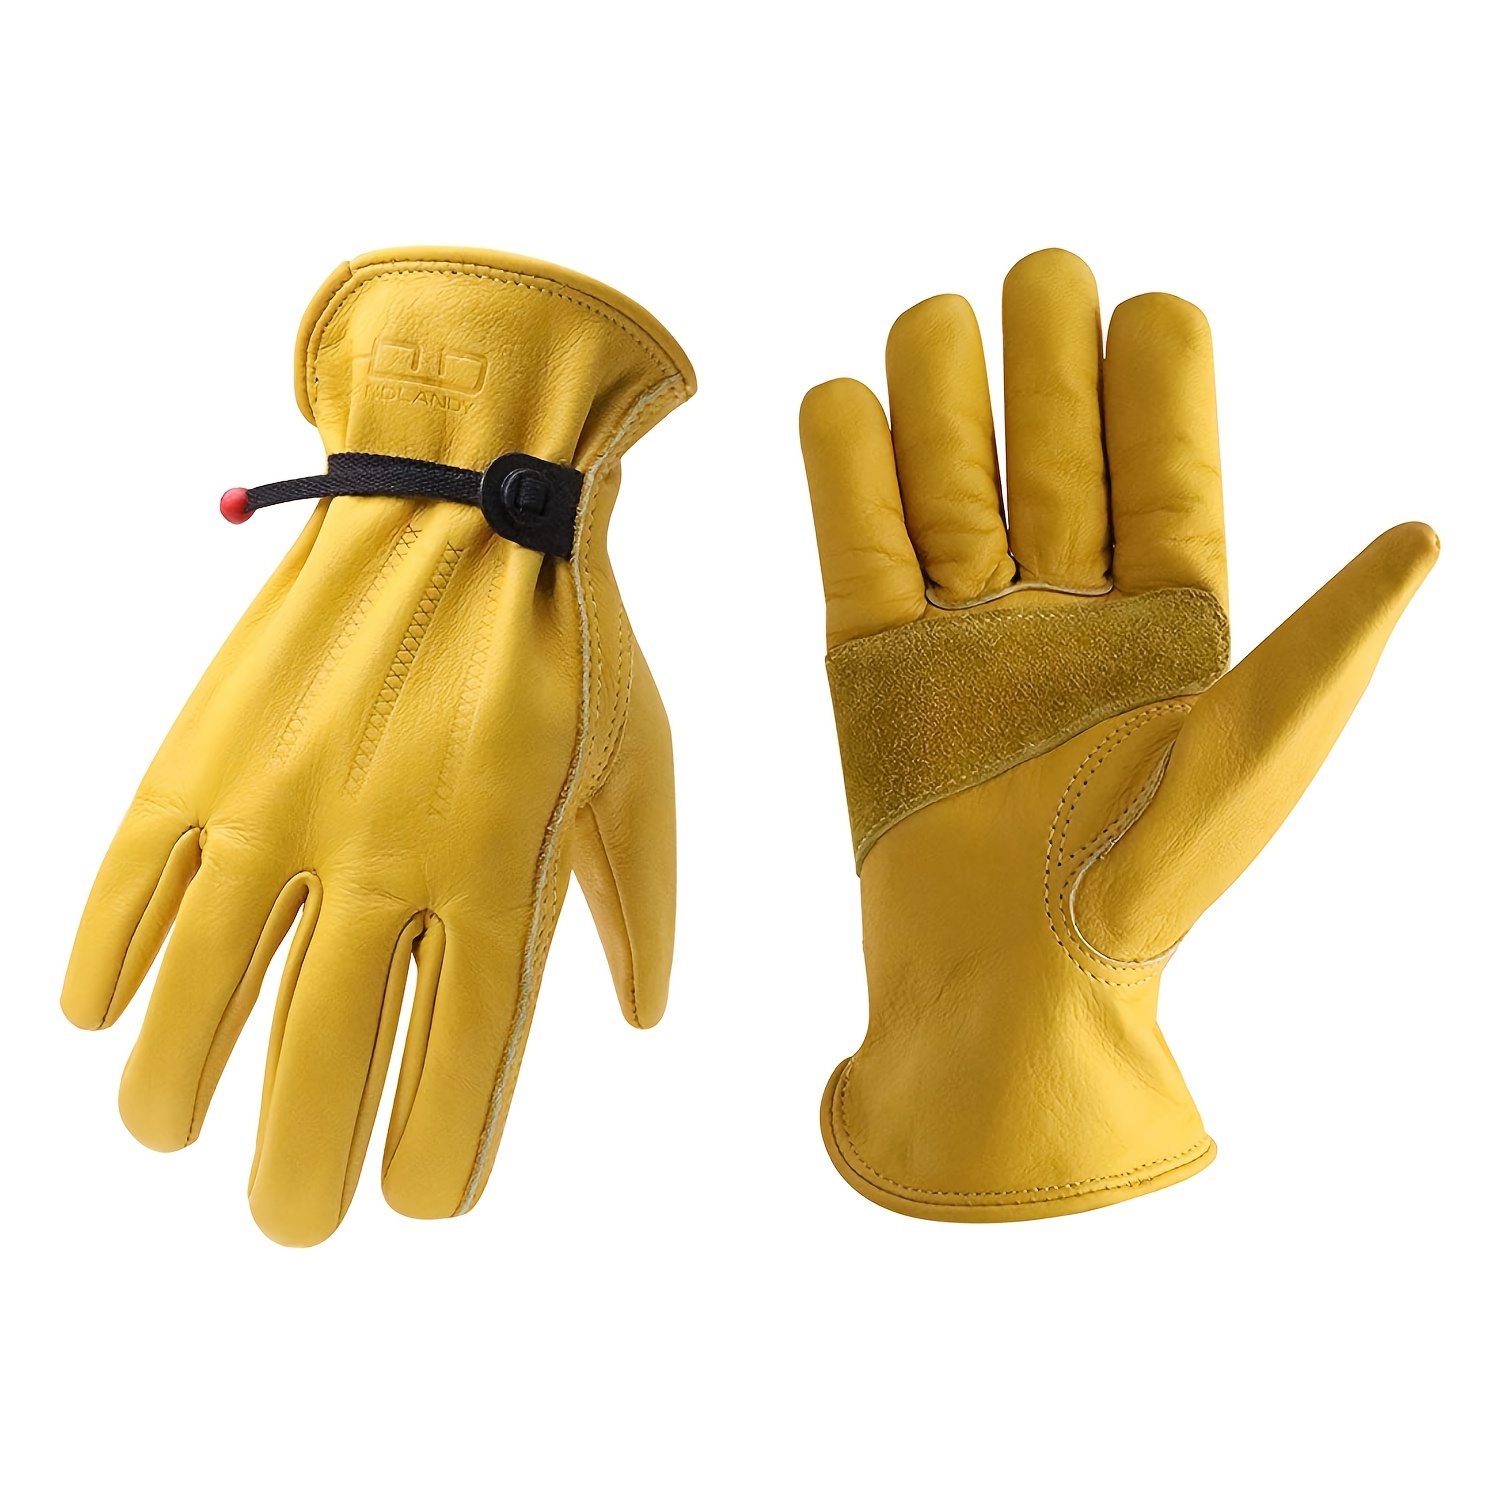 Premium Cowhide Leather Work Safety Gloves Drivers Construction Yardwork  Glove